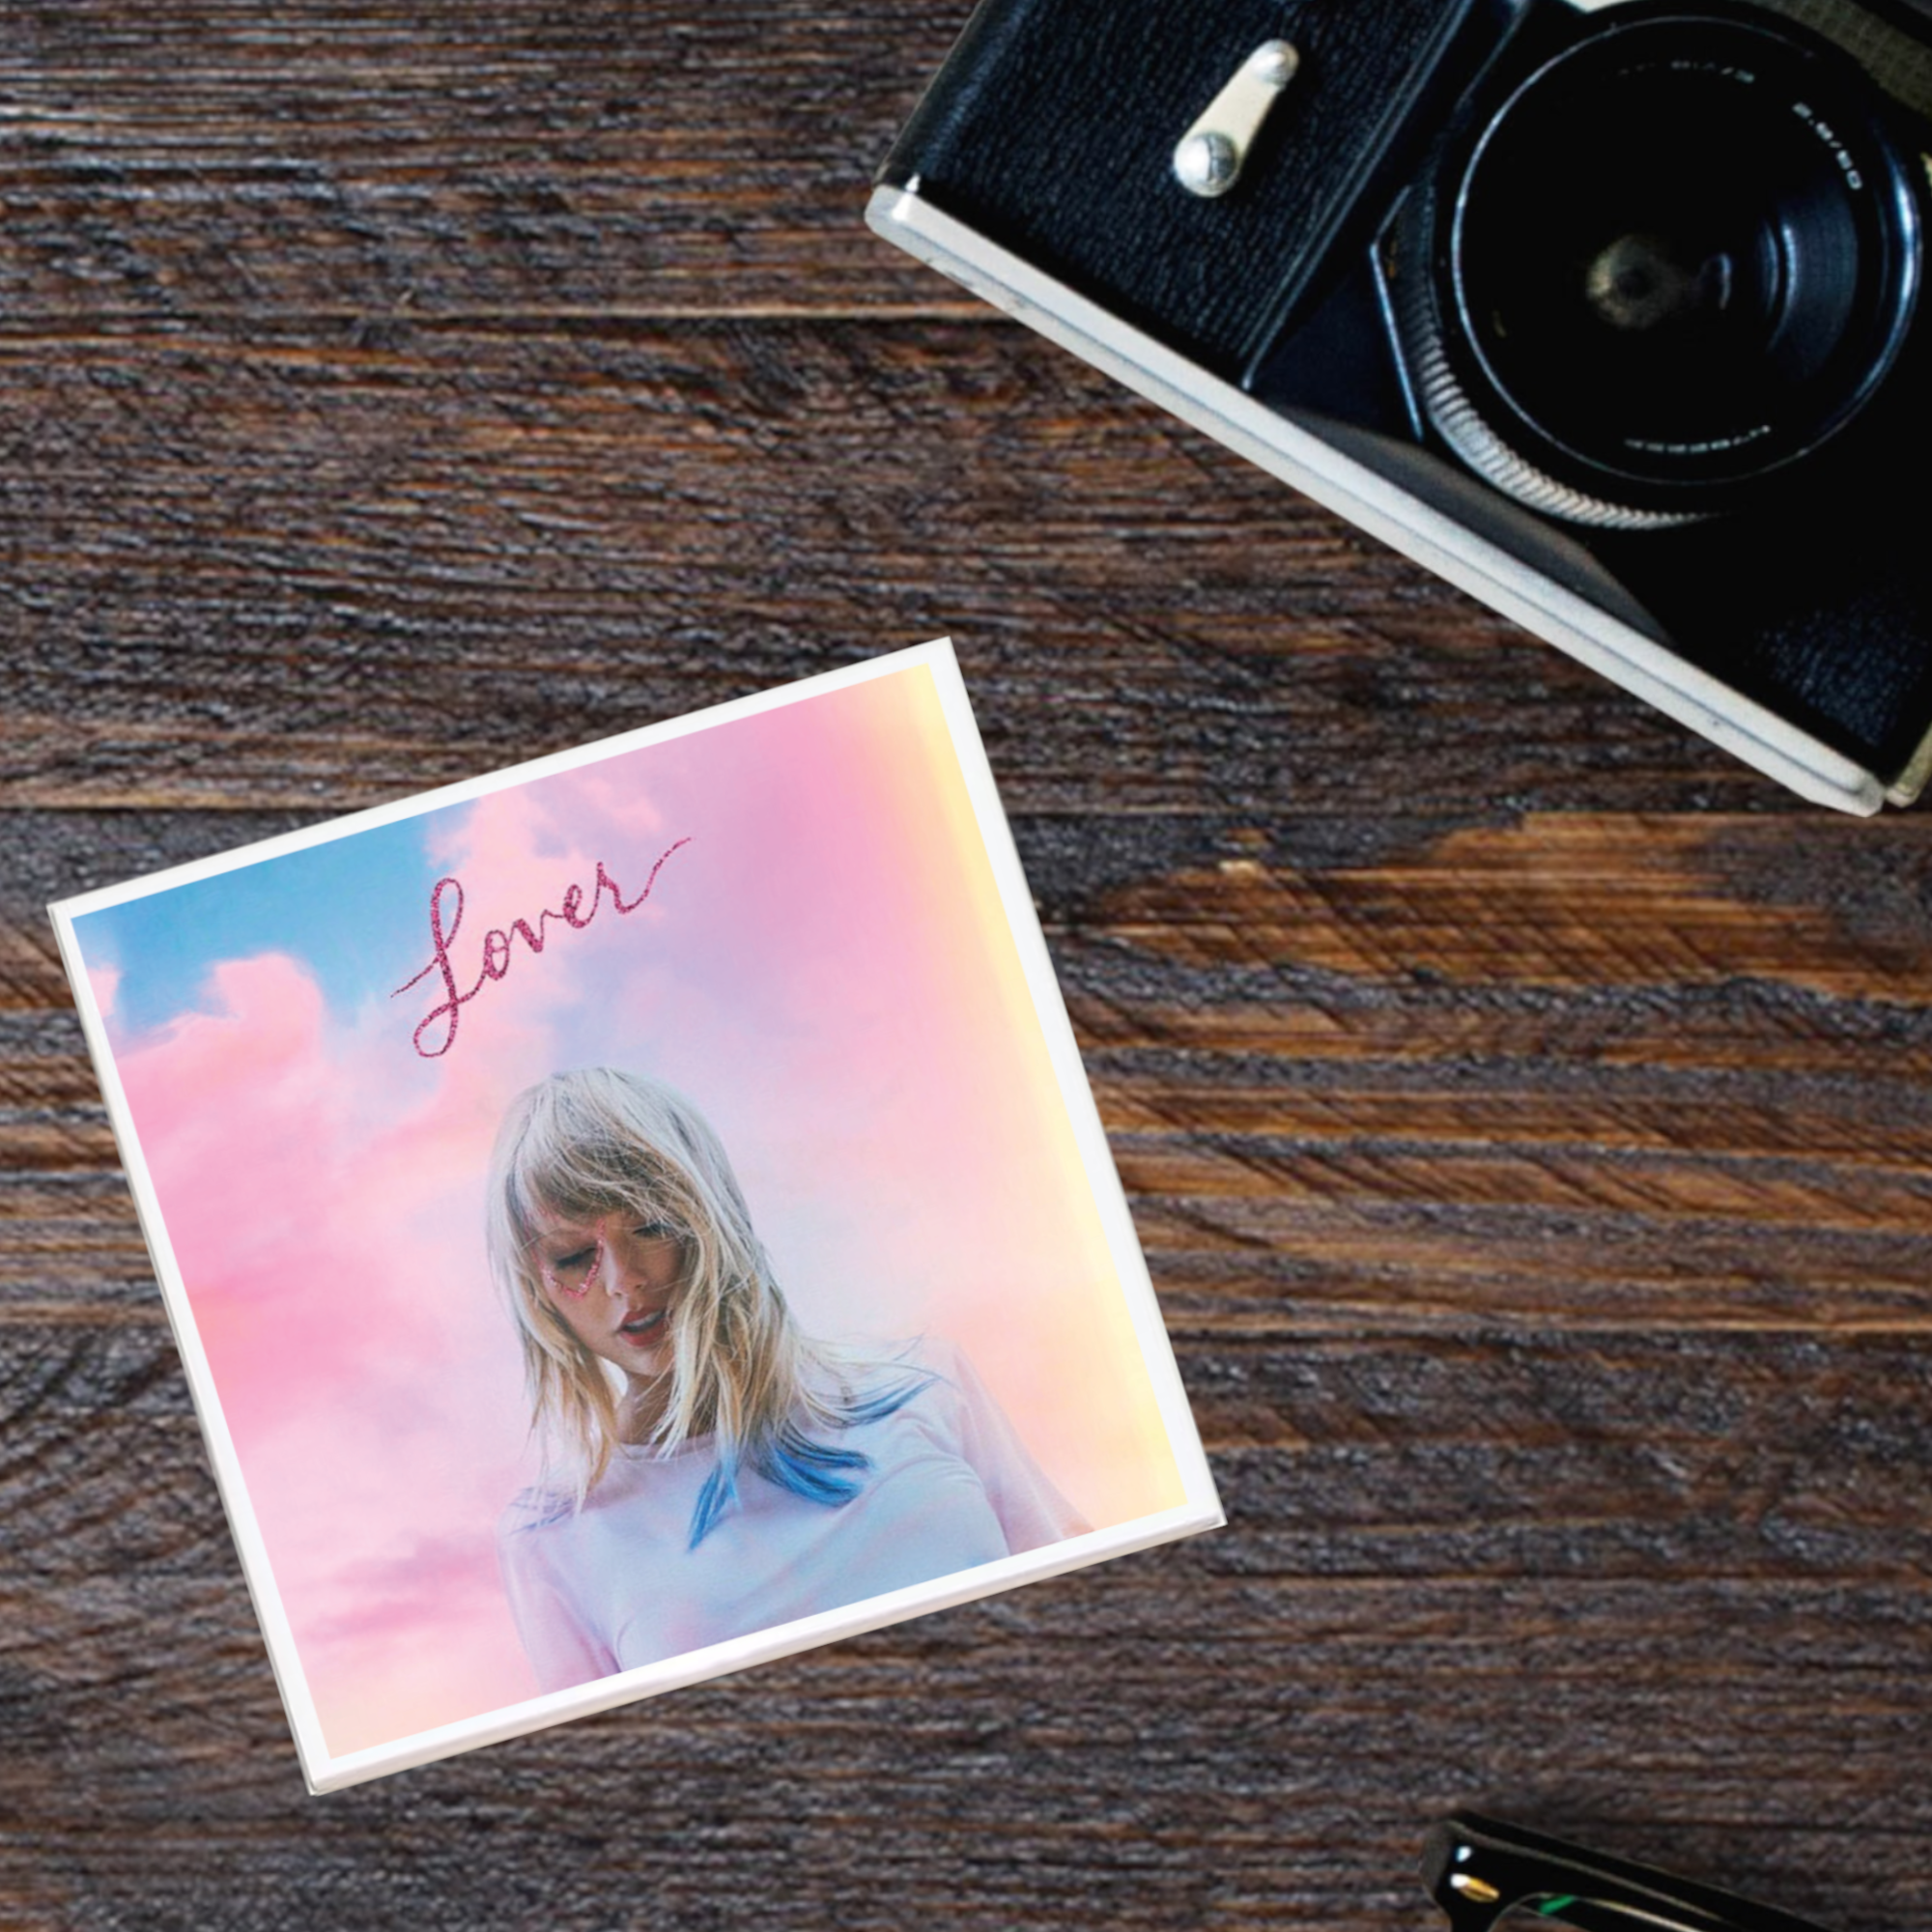 Lucky Mfg. Co. - Taylor Swift 'Lover' Album Coaster